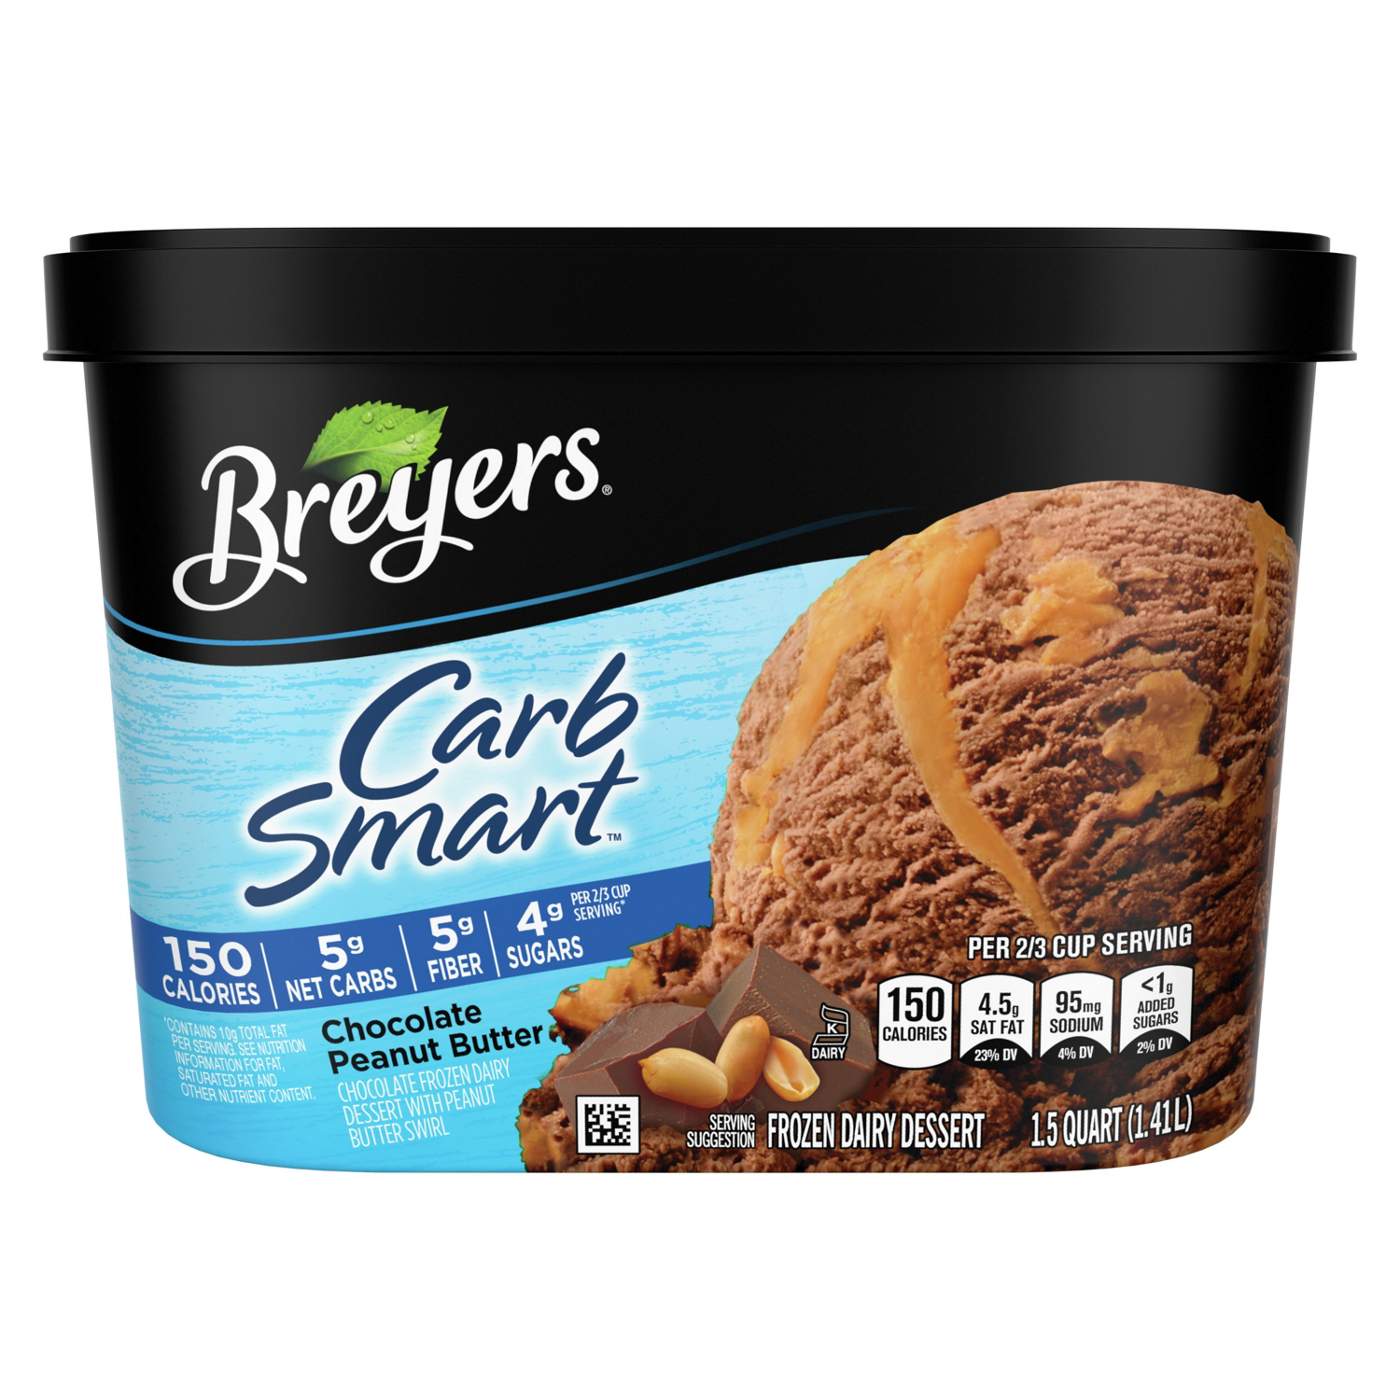 Breyers Carb Smart Chocolate Peanut Butter Frozen Dairy Dessert; image 1 of 6